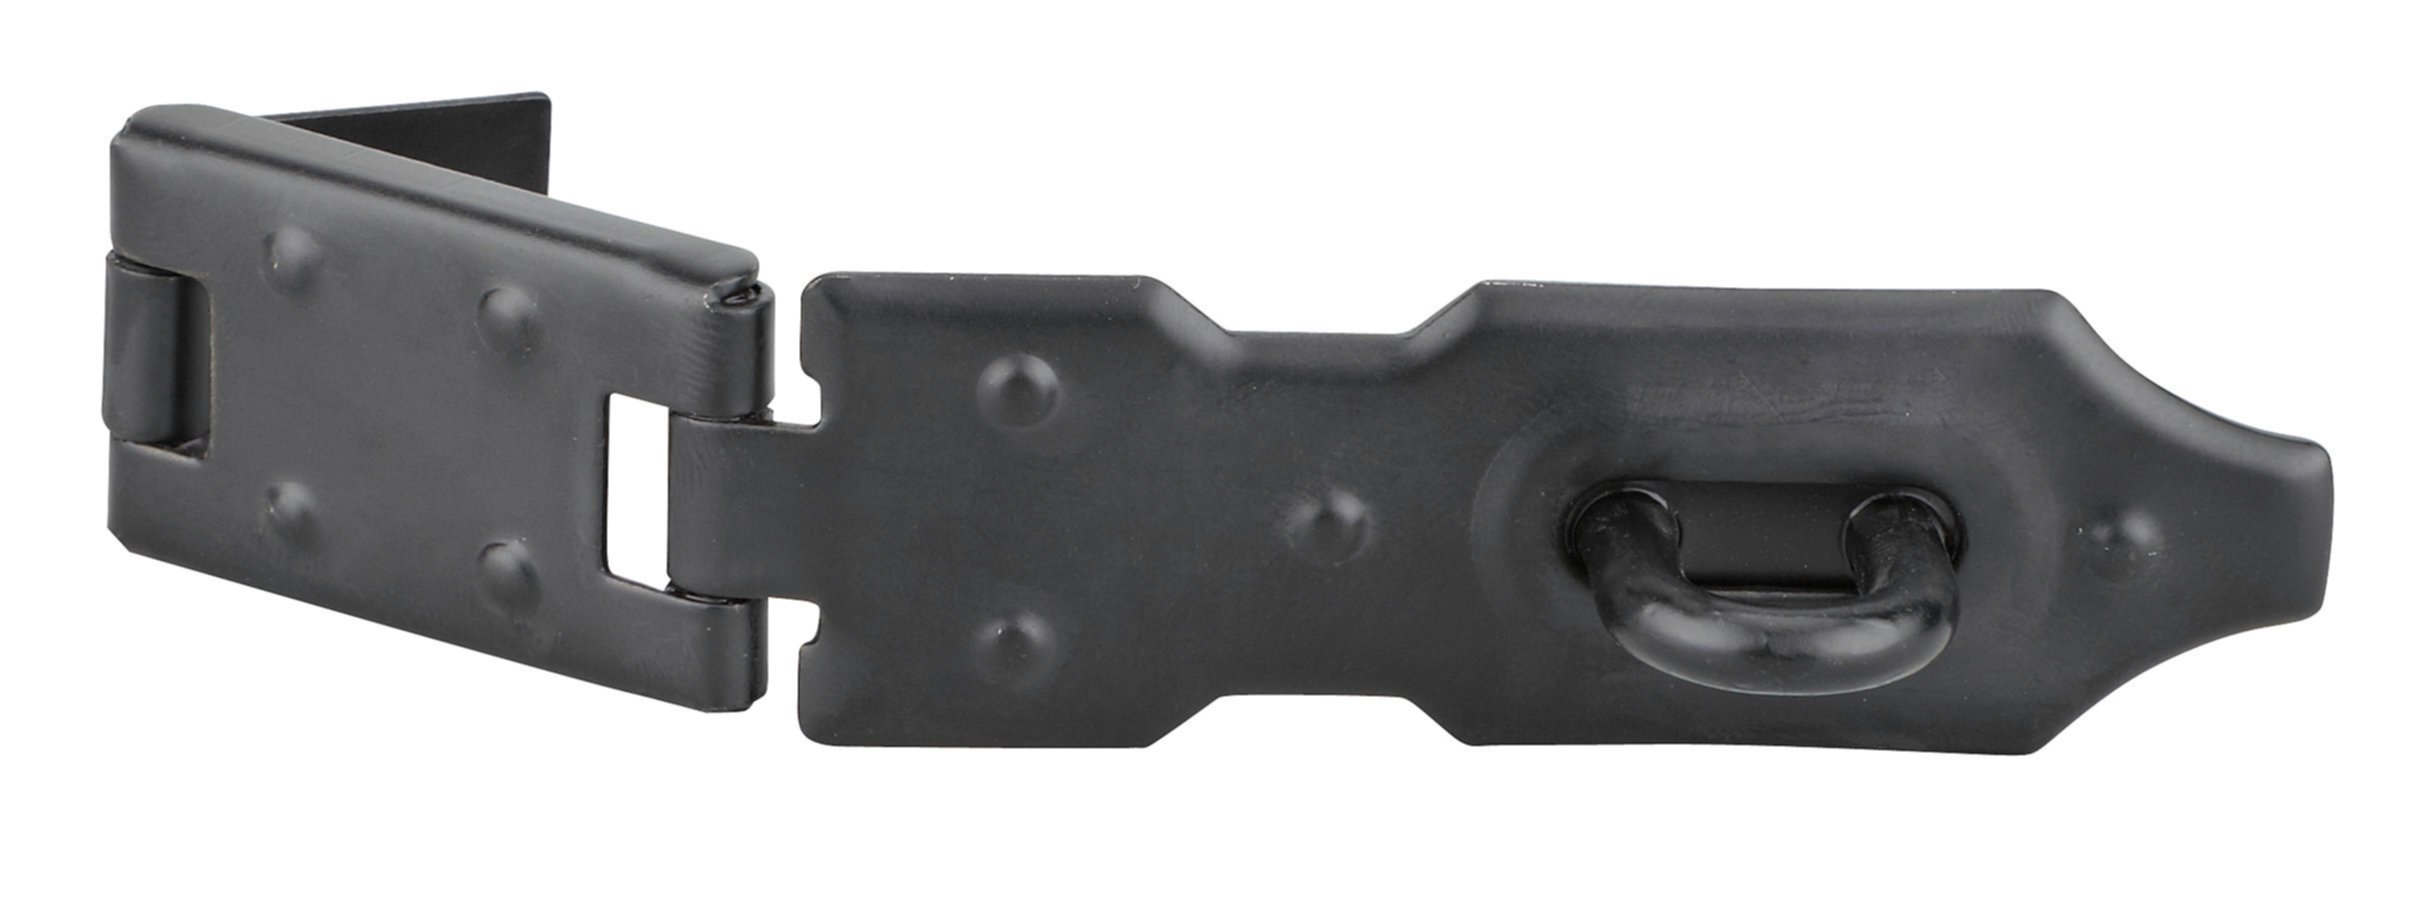 Porte-cadenas recouvrement acier 120mm - THIRARD